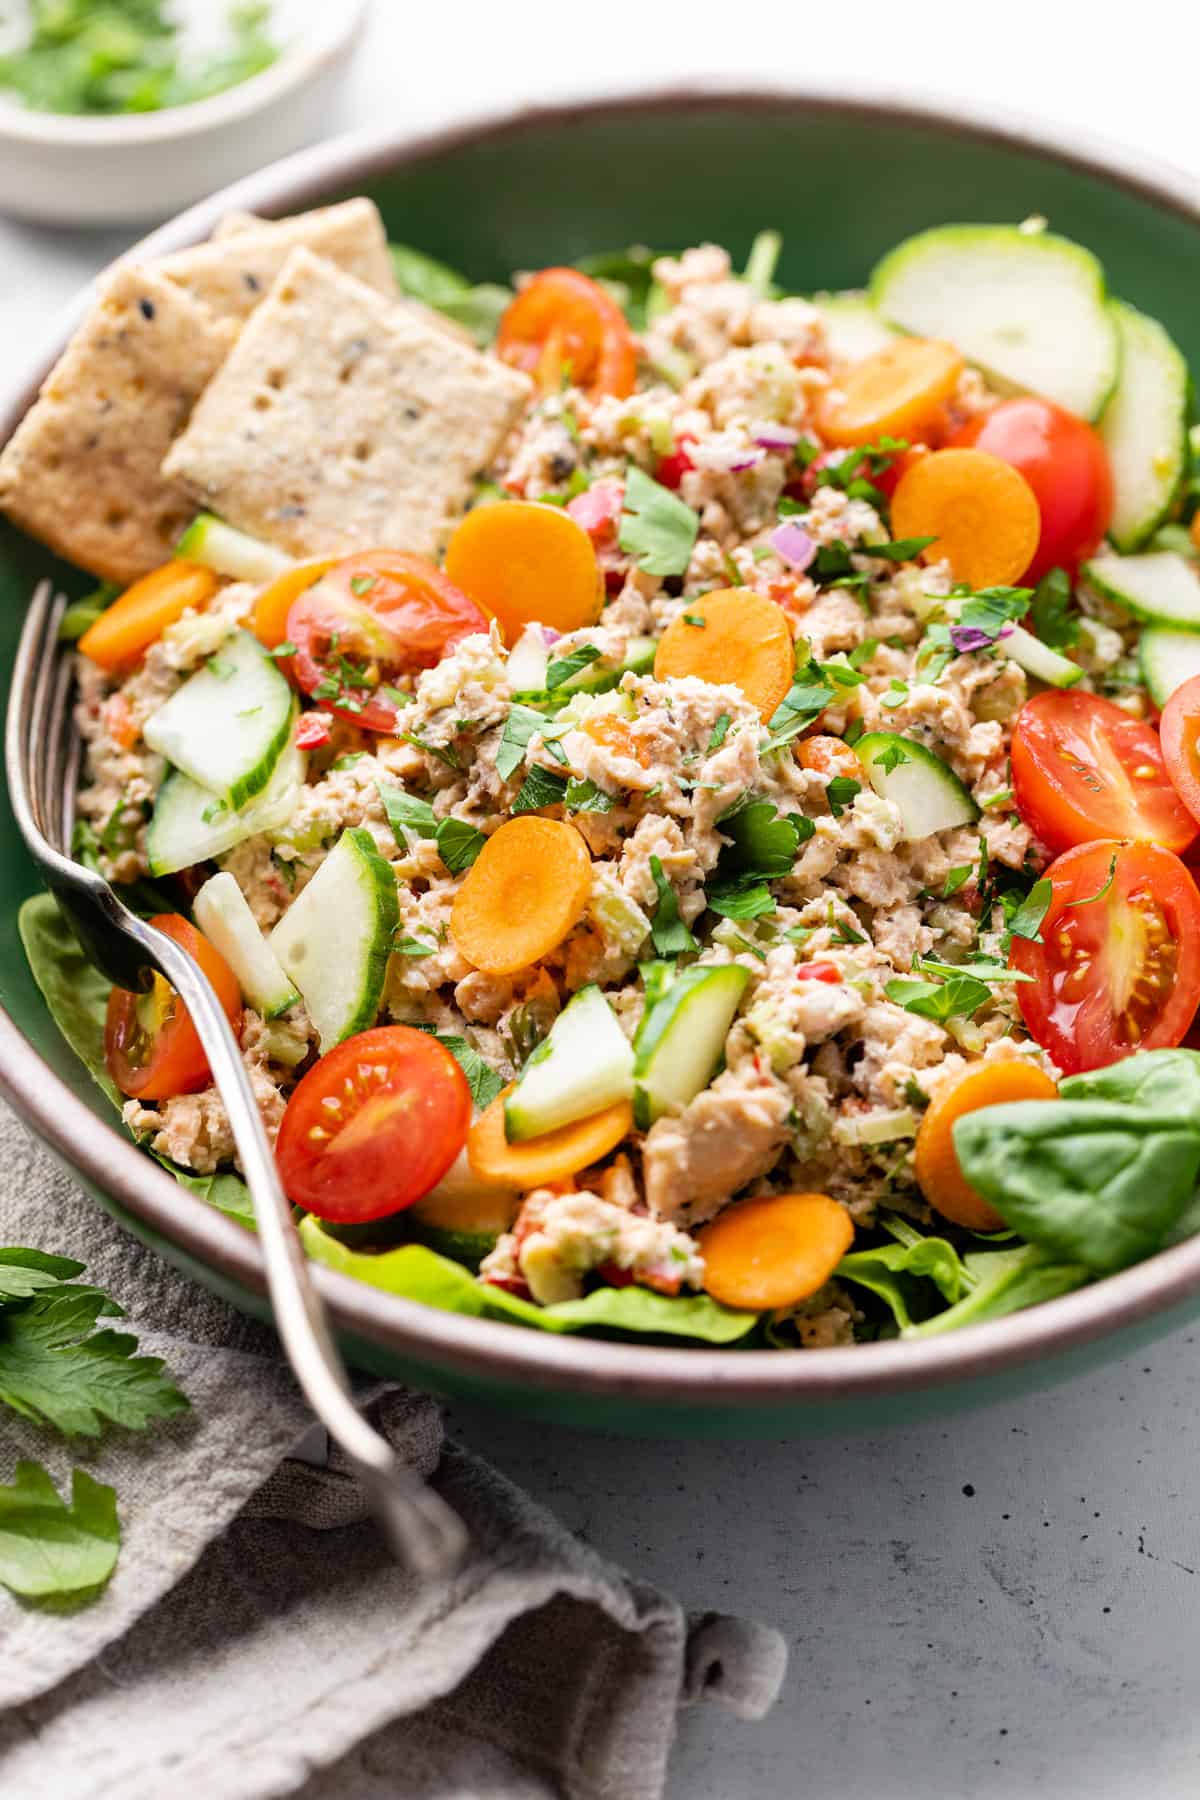 salmon salad with veggies and greens